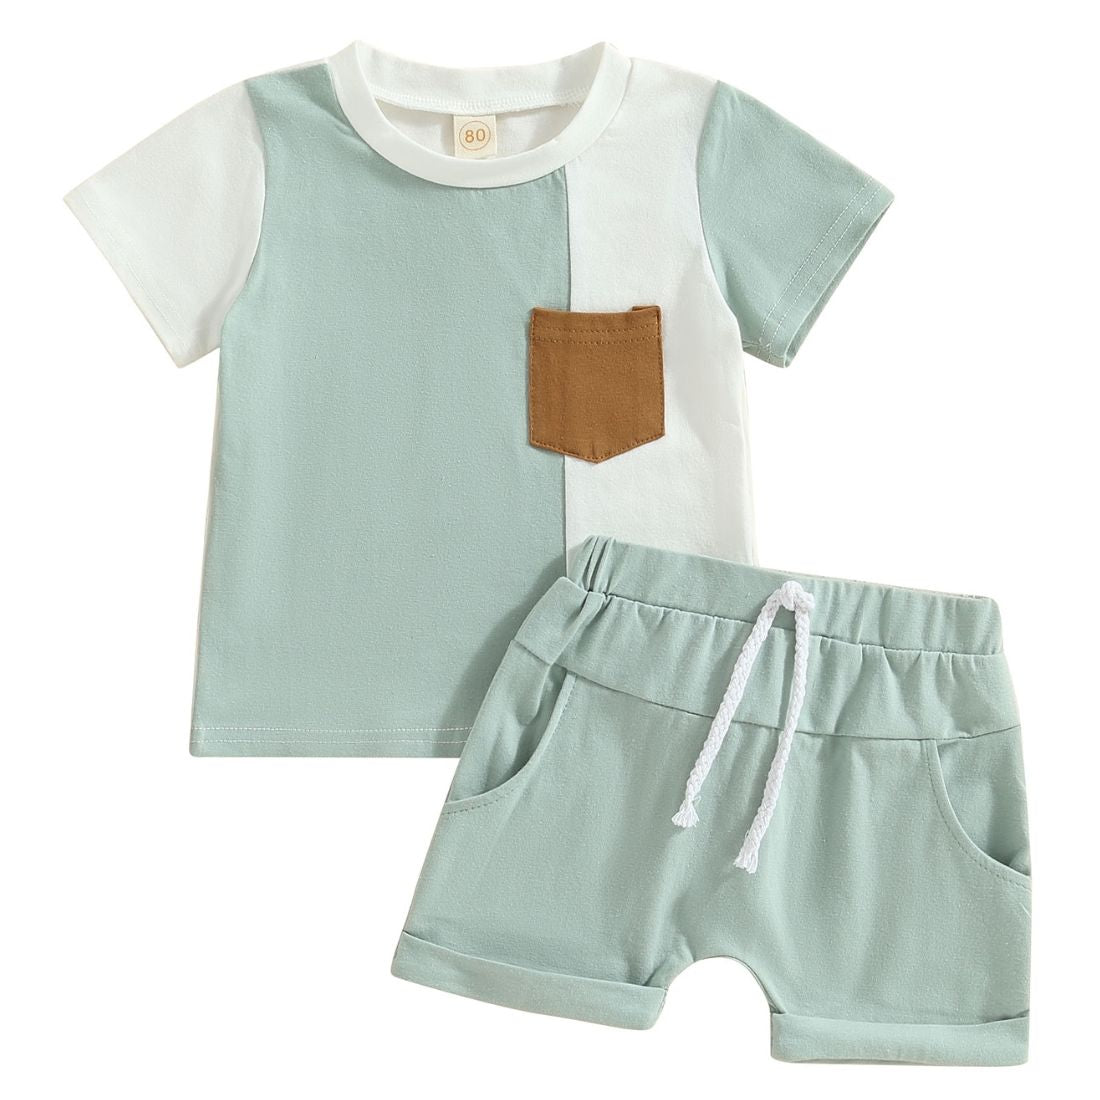 Contrast Pocket Shorts Toddler Clothing Set | White and Green Set